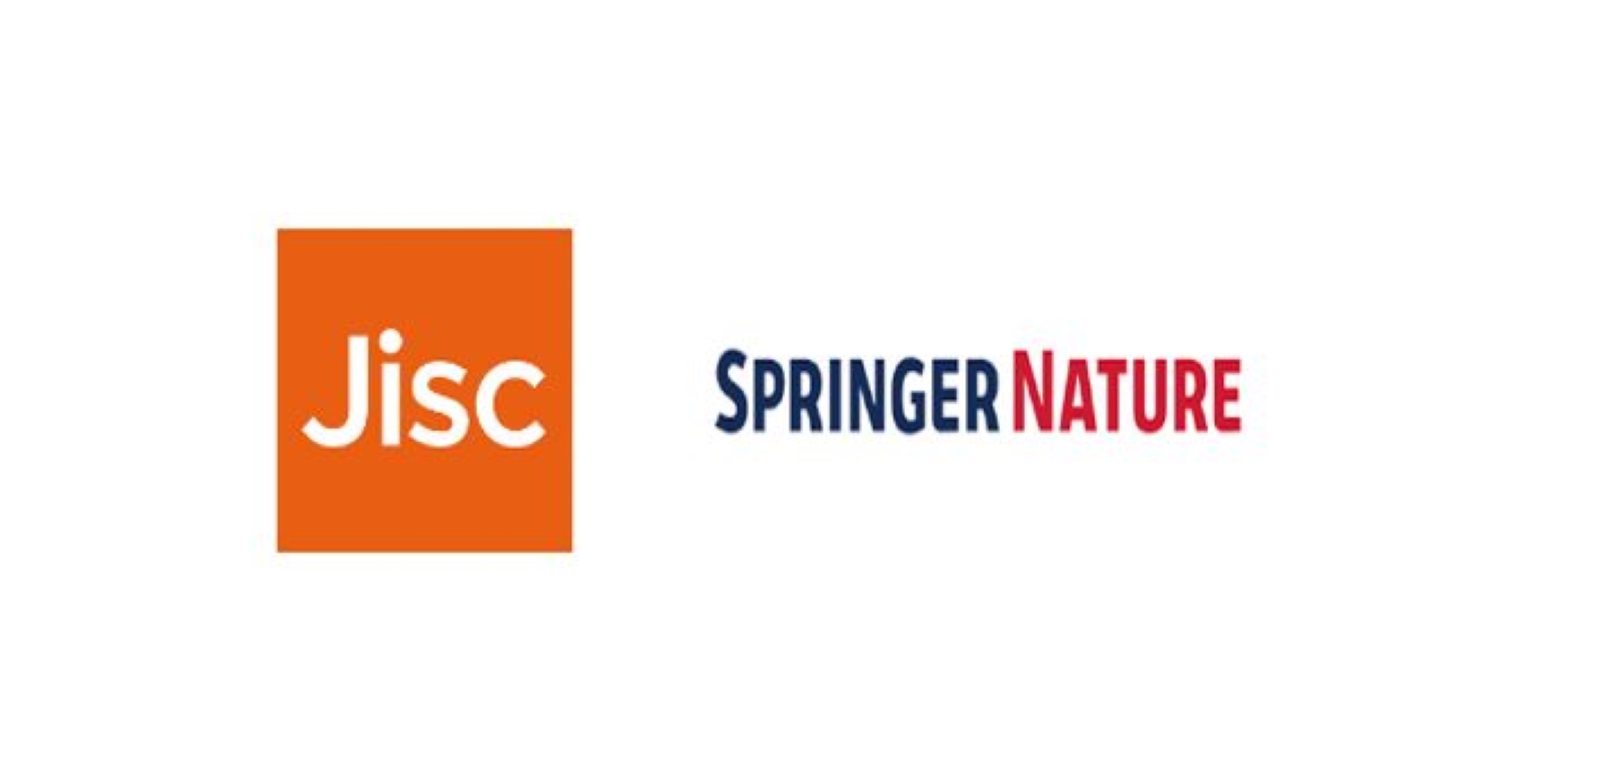 JISC and Springer Nature logos